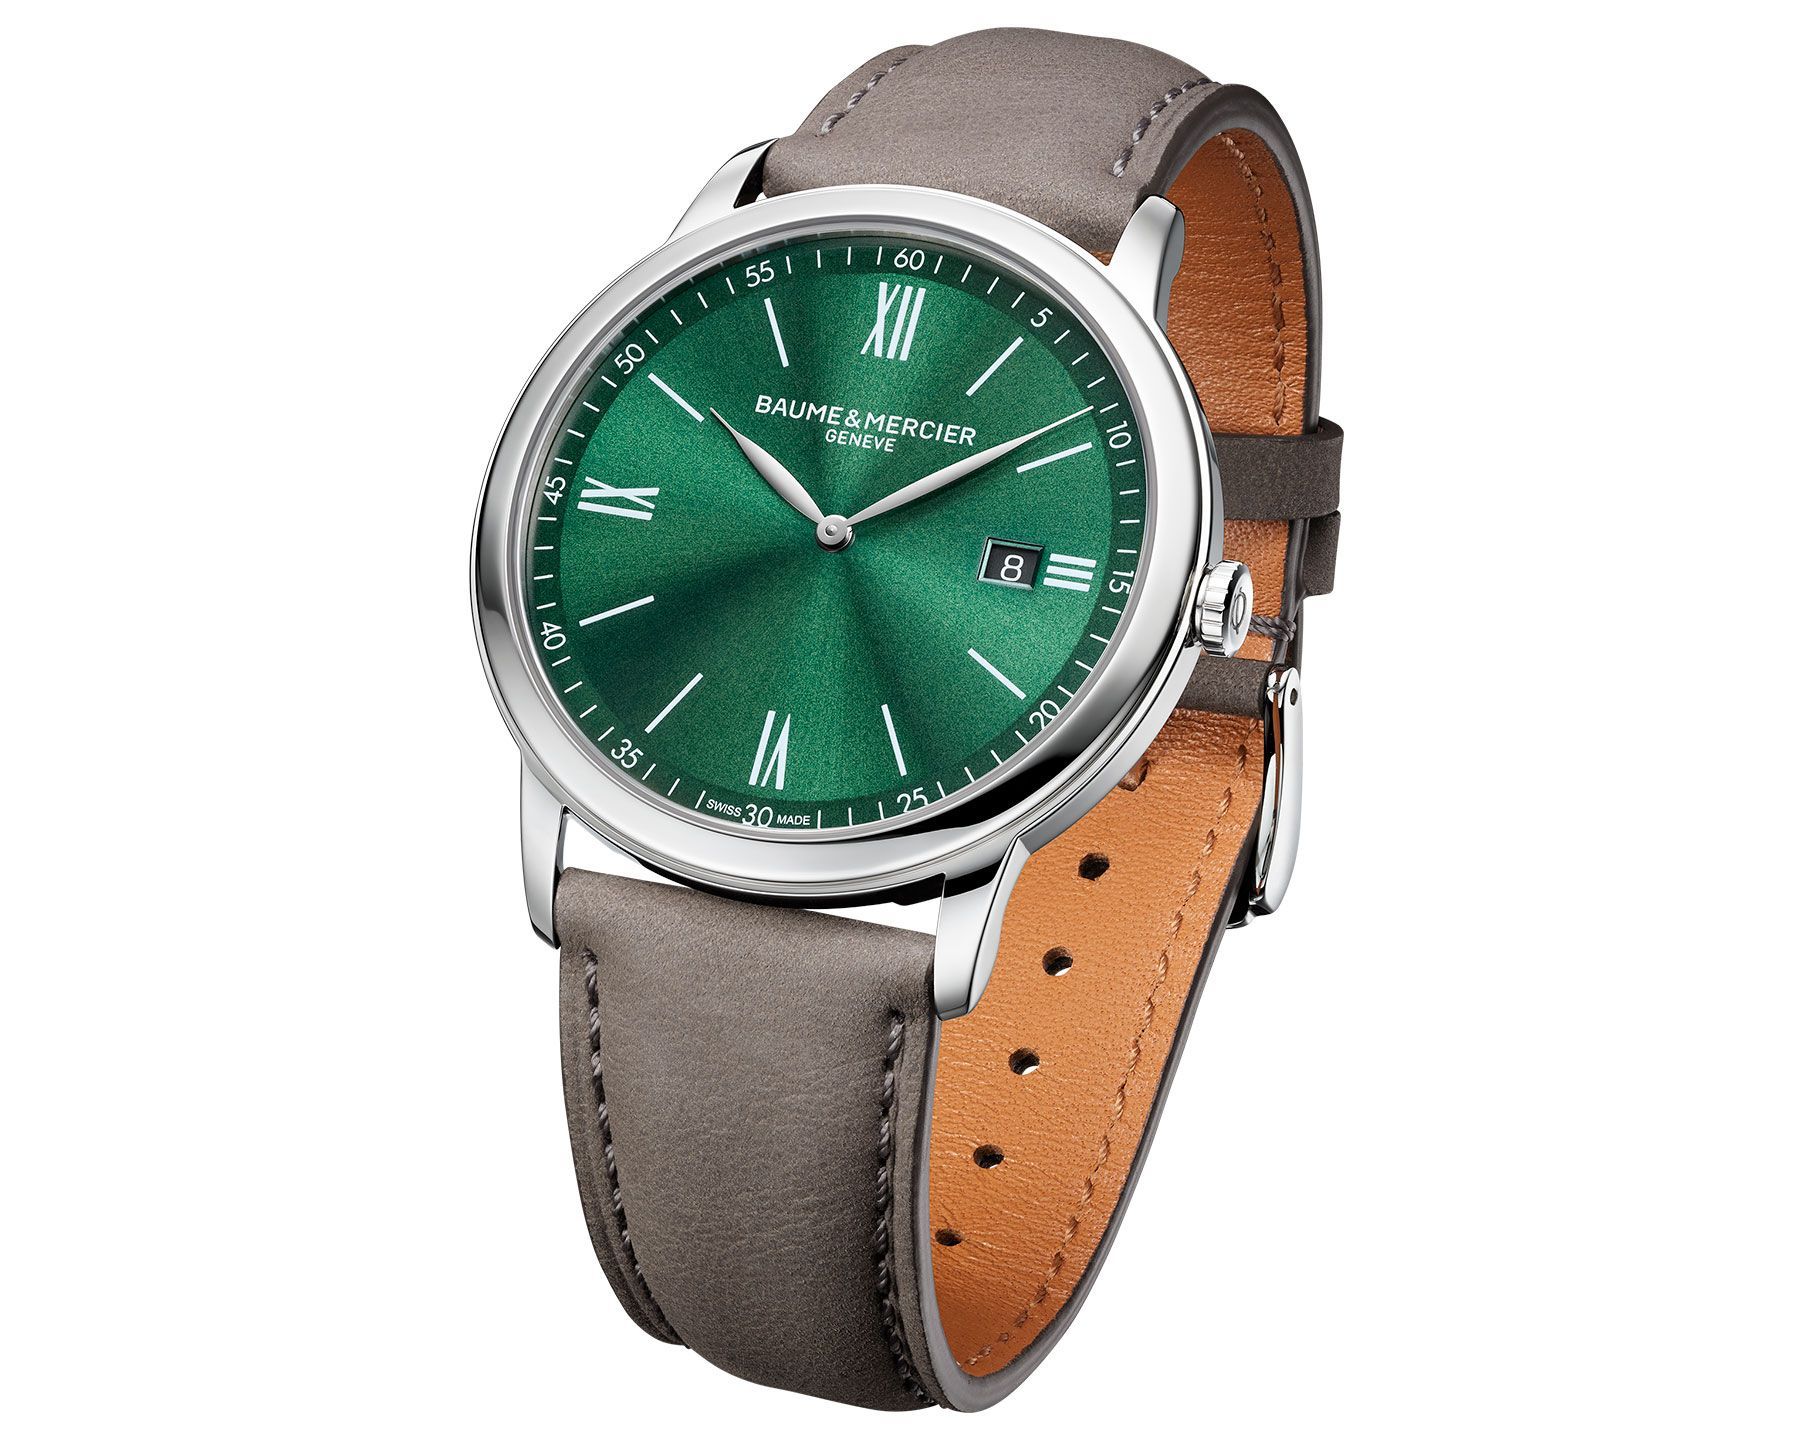 Baume & Mercier Classima 42 mm Watch in Green Dial